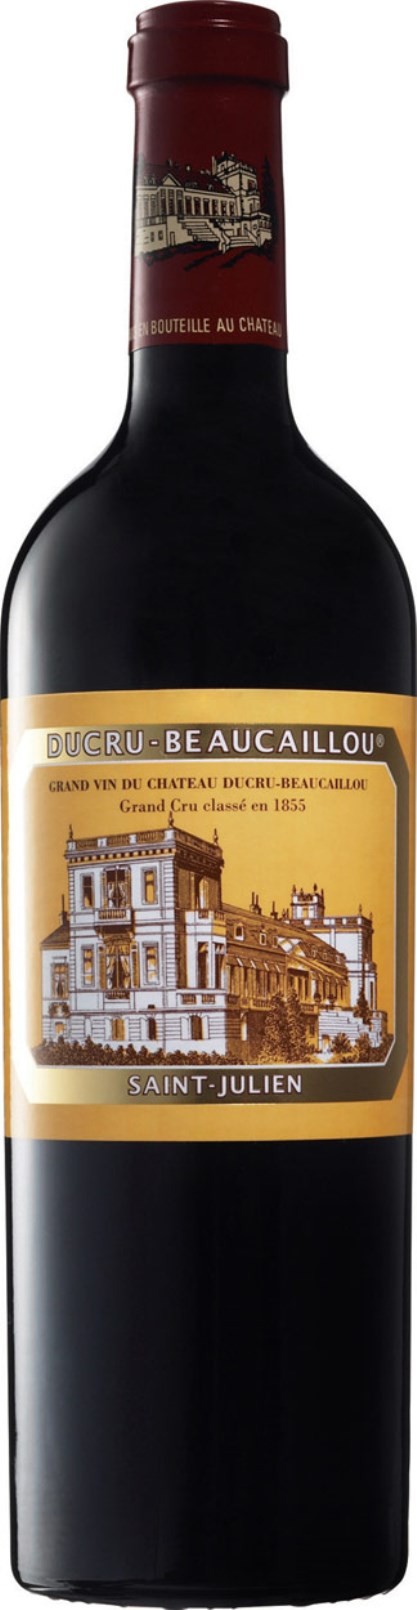 Chateau Ducru Beaucaillou 1989, Saint Julien